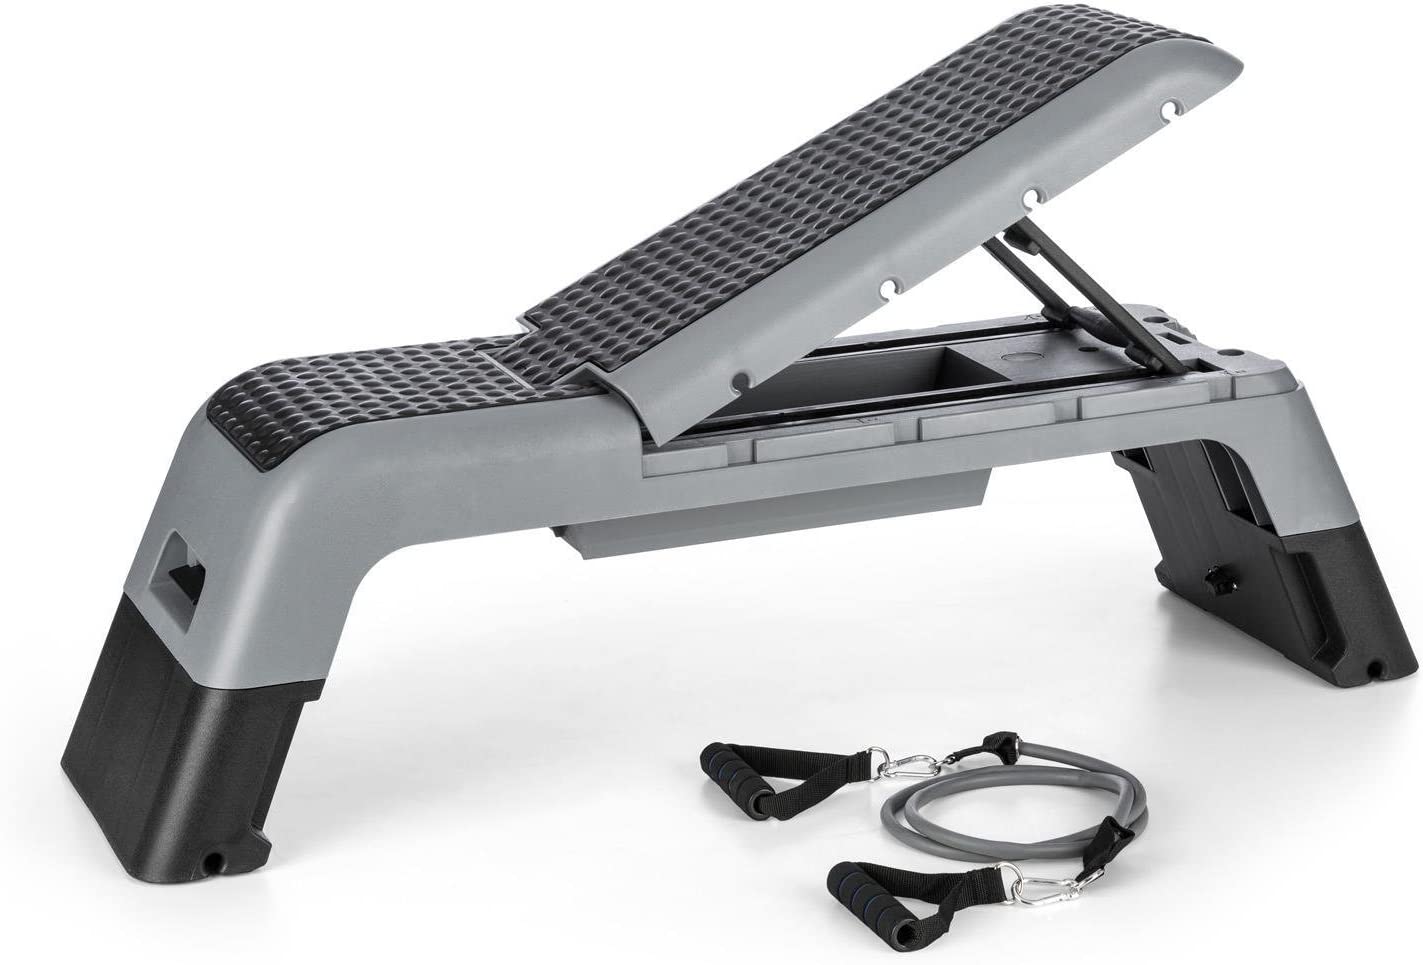 Vector X Adjustable Bench Workout Deck (Black/Grey) - Best Price online Prokicksports.com